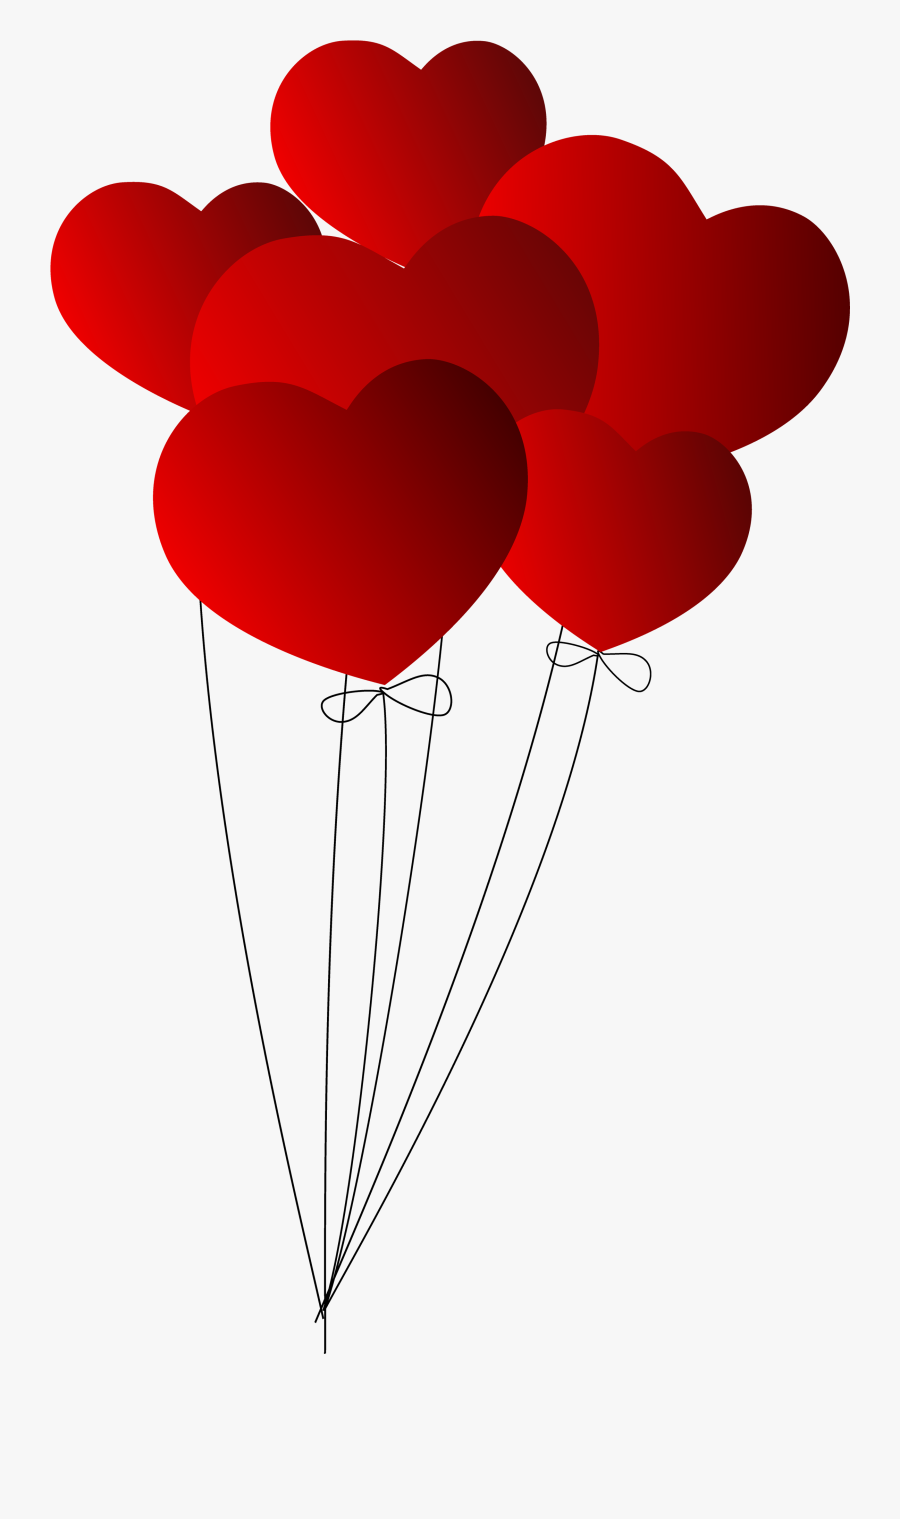 Png Images Pngpix Heart - Heart Balloon Png Clipart, Transparent Clipart